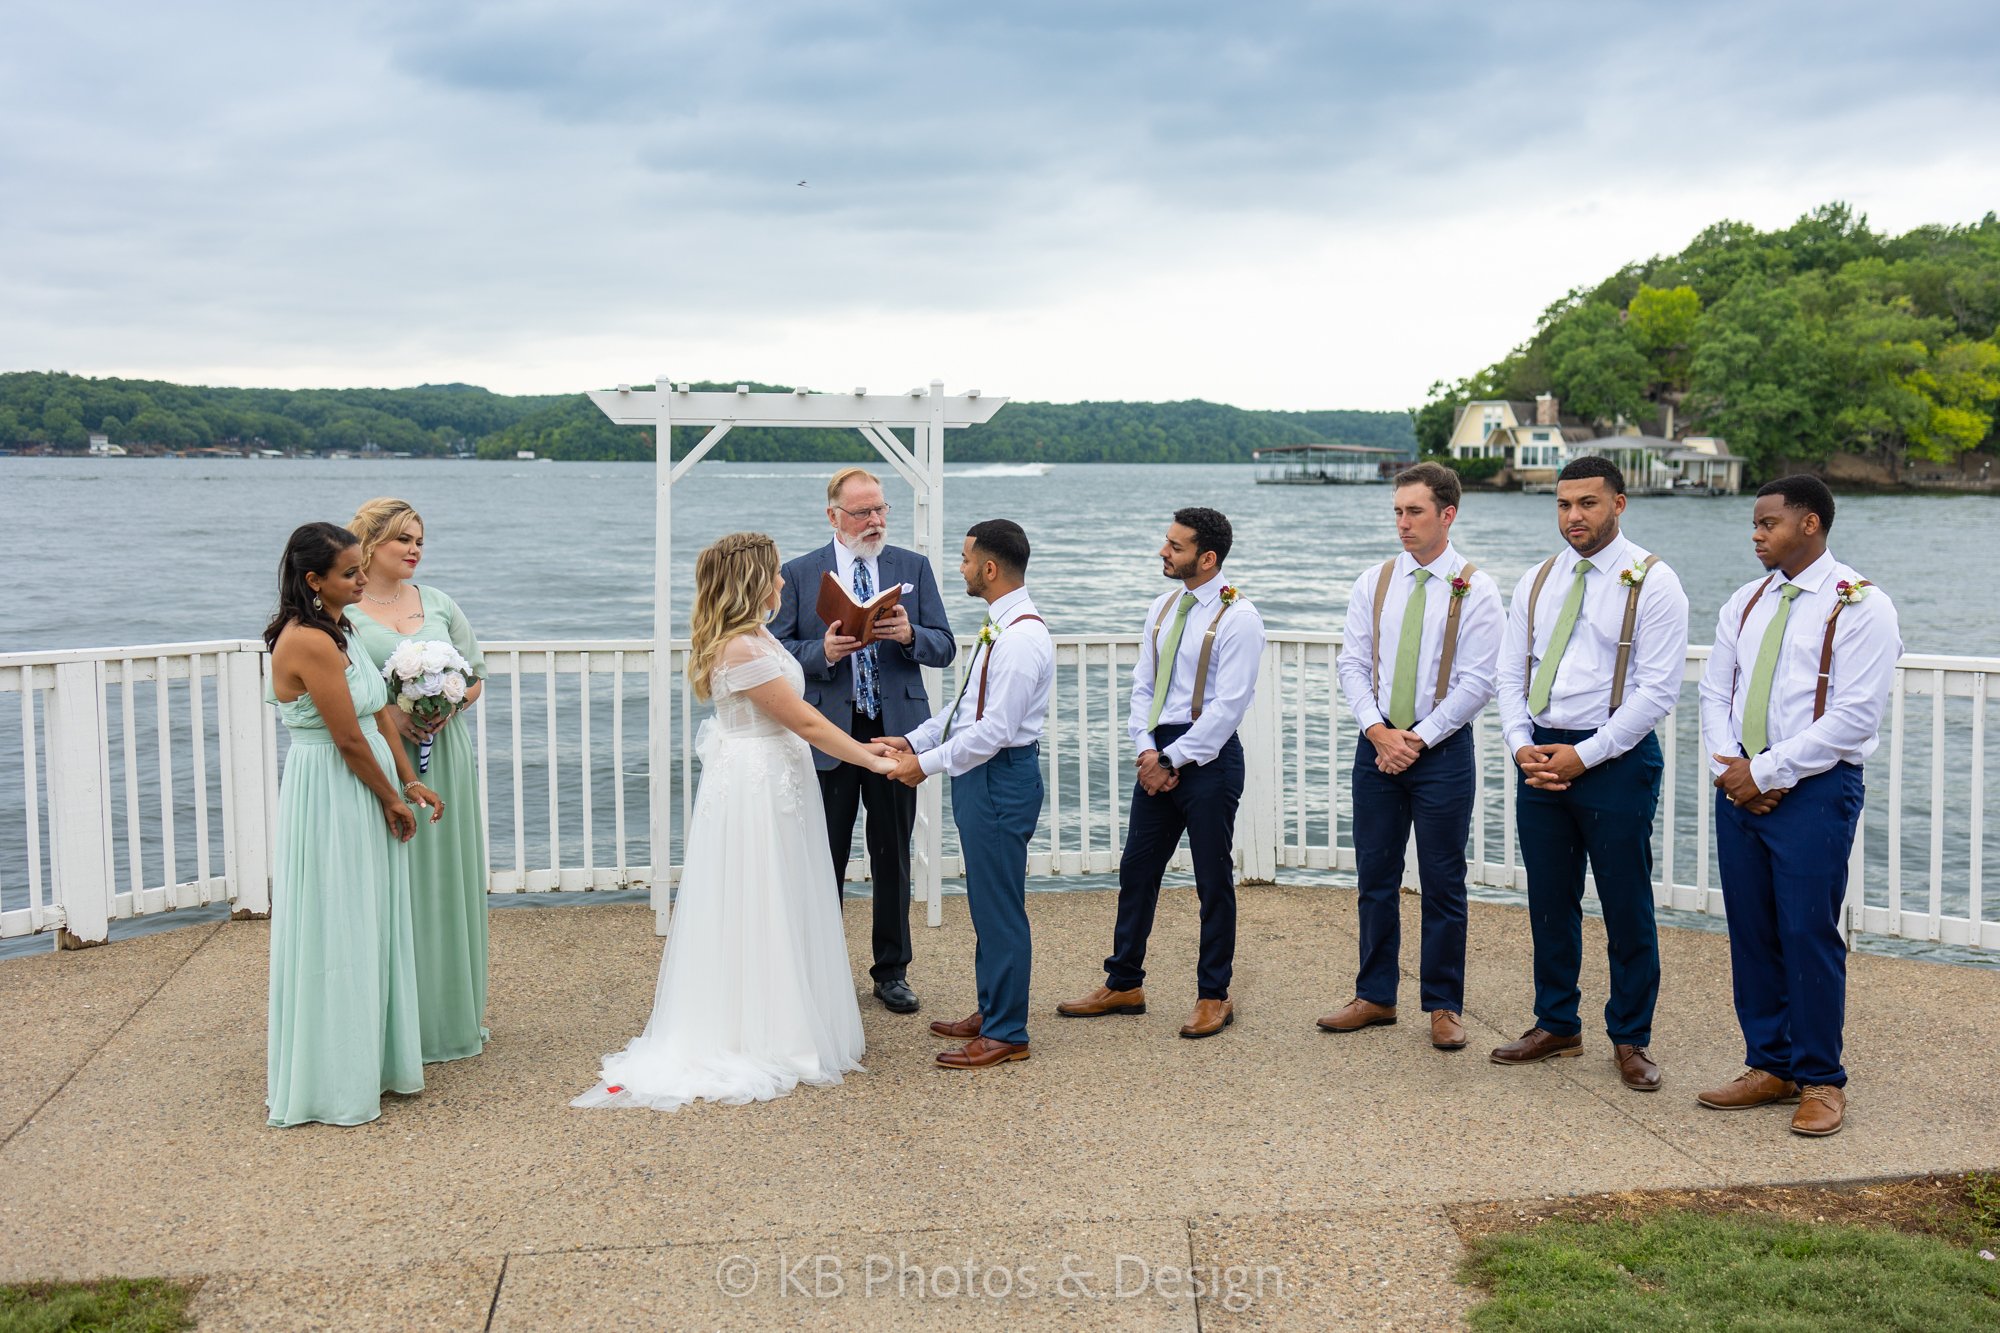 Abbi-Daniel-Wedding-Lake-of-the-Ozarks-Margaritaville-Missouri-Jefferson-City-wedding-photos-KB-Photos-and-Design-498.jpg